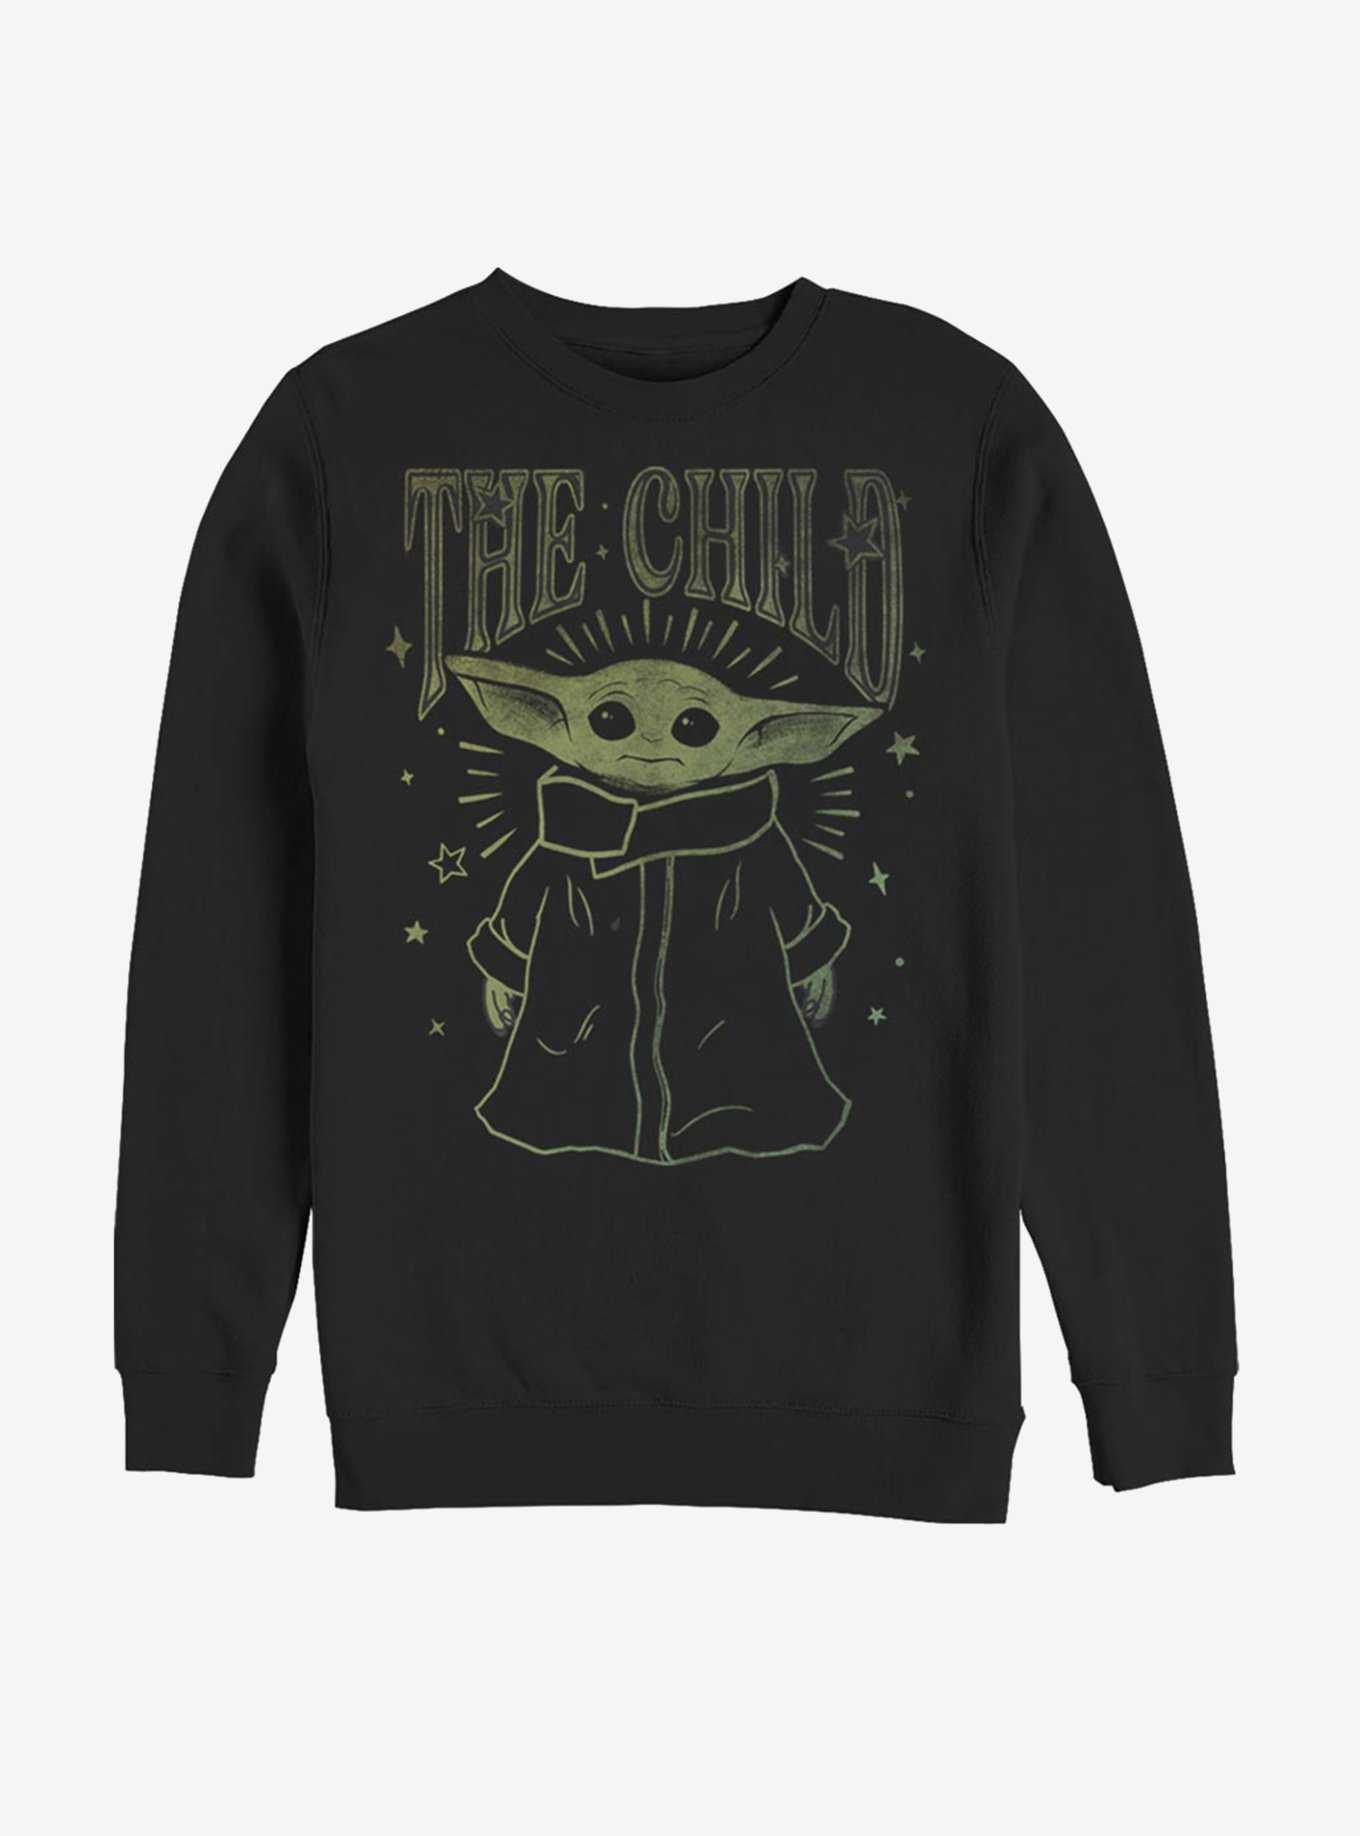 Star Wars The Mandalorian The Child Vintage Outline Sweatshirt, , hi-res